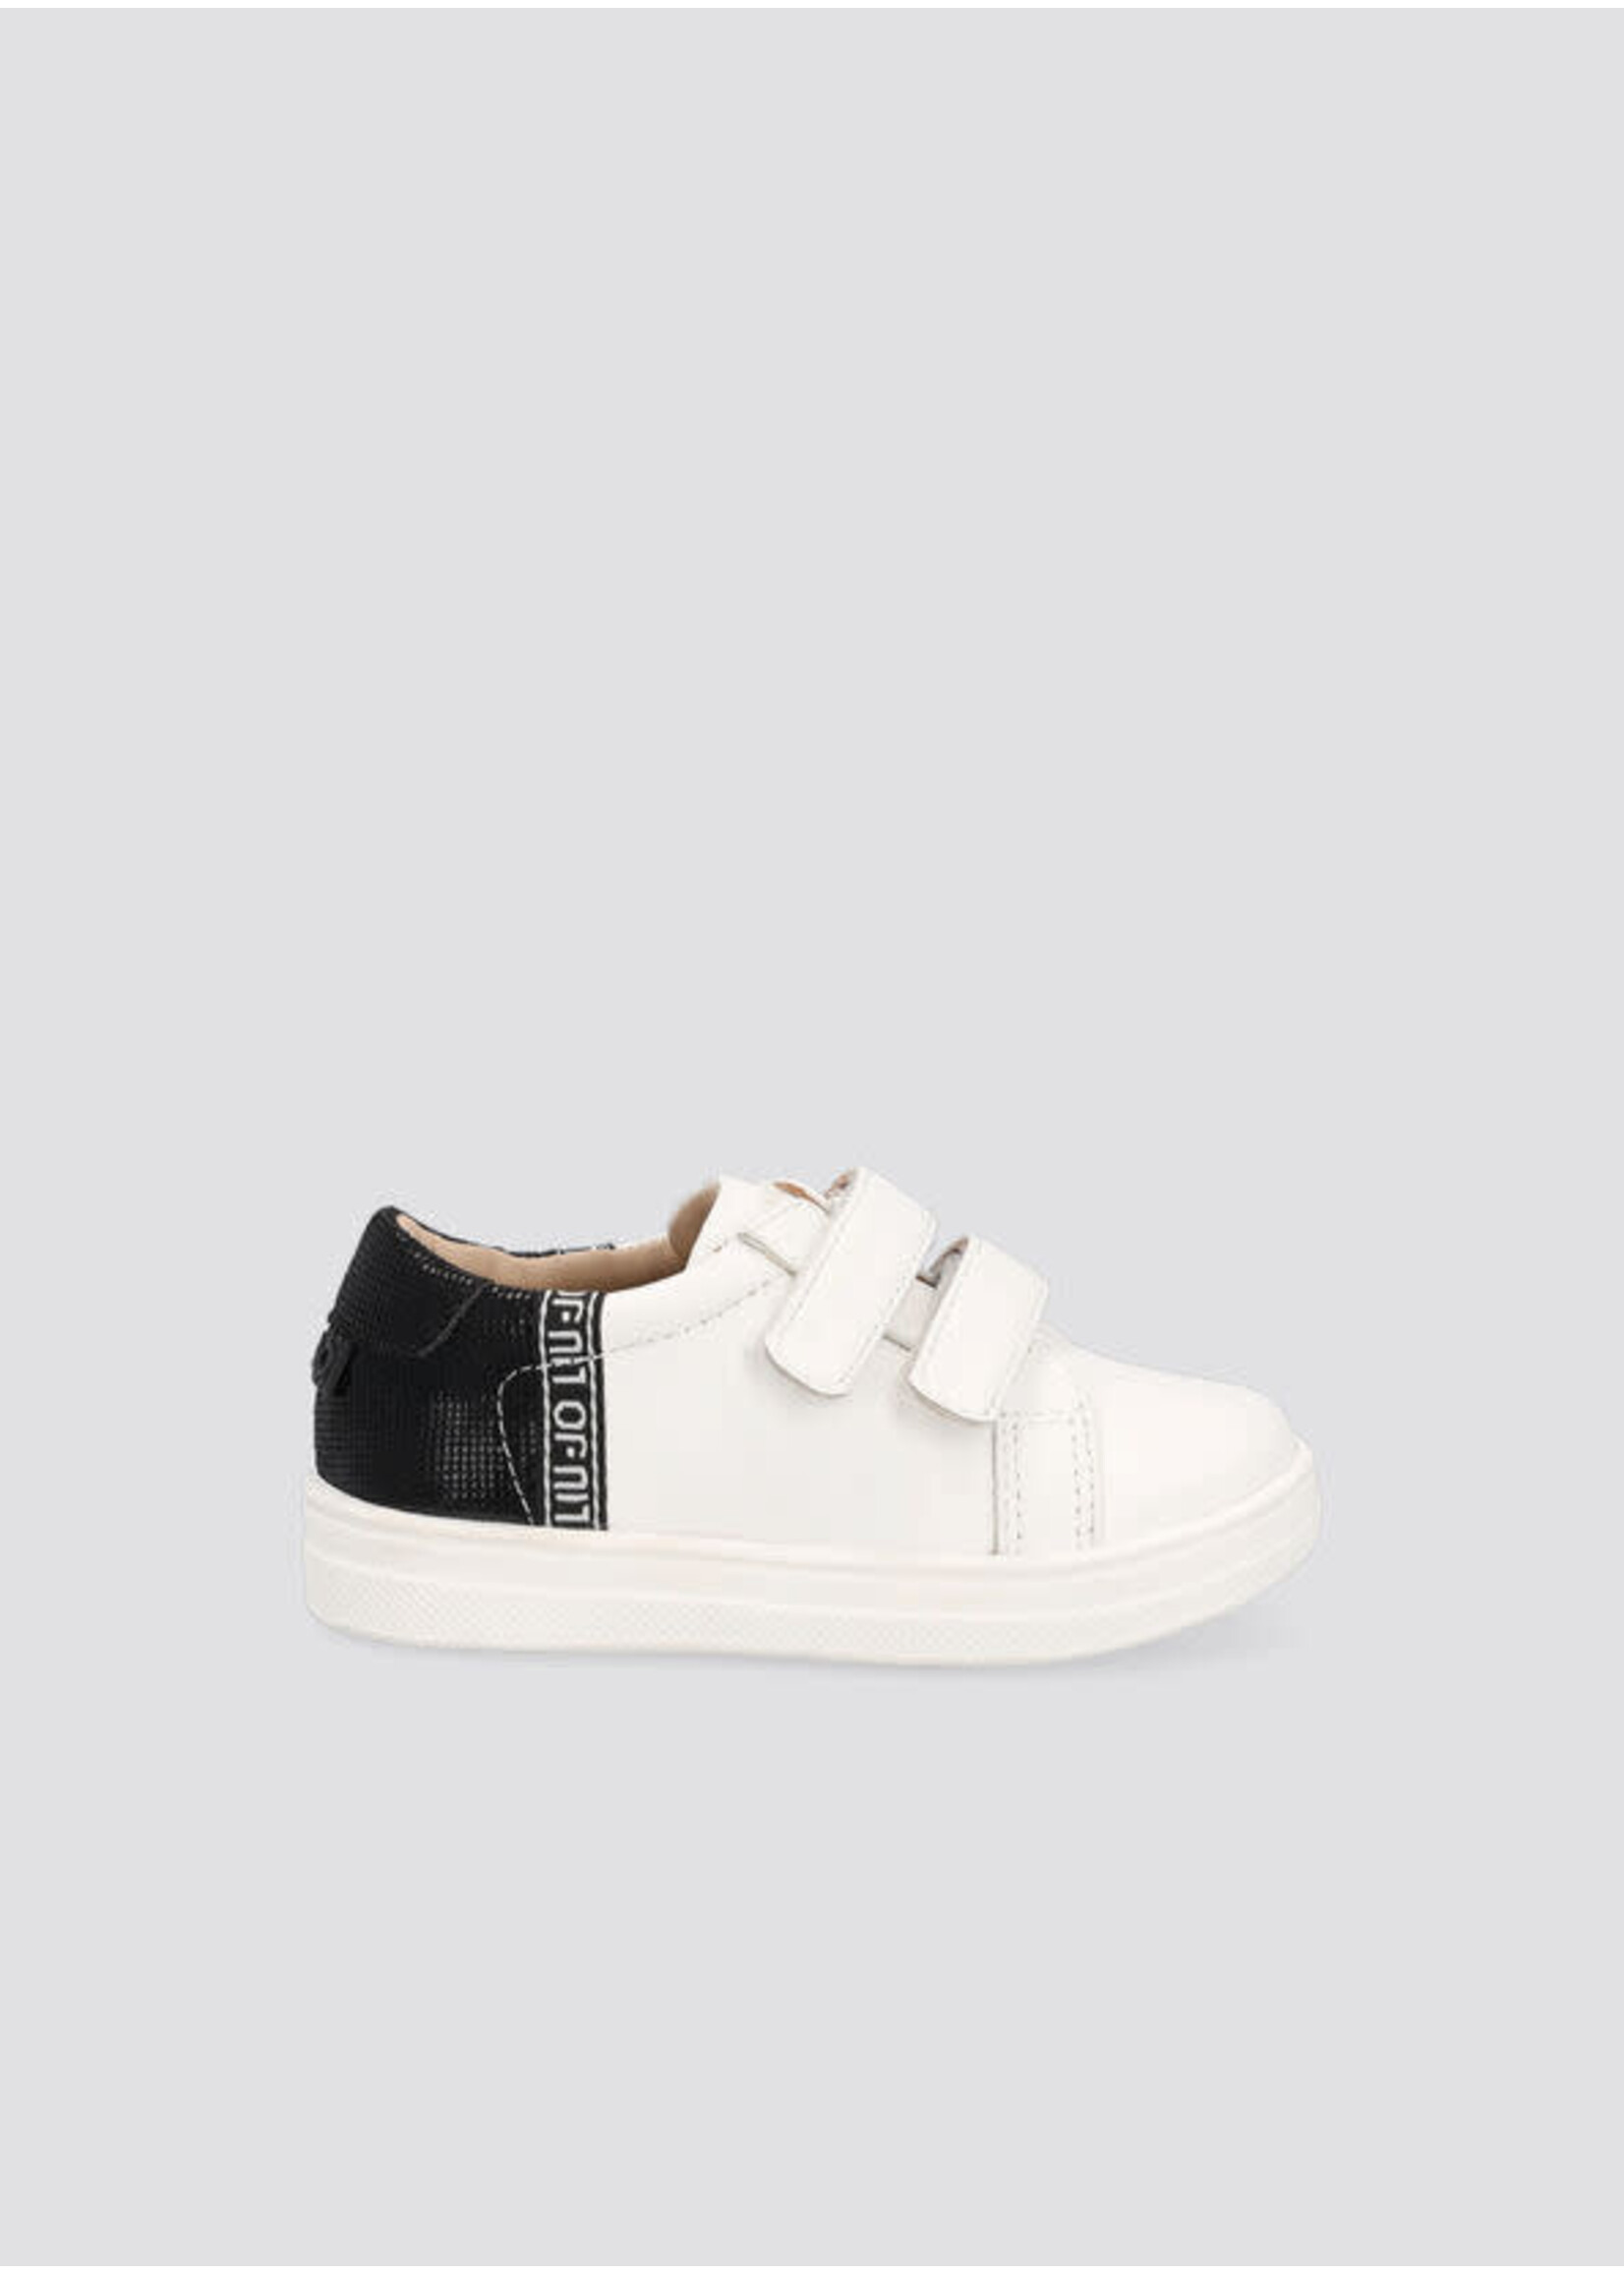 Liu Jo Liu Jo sneakers white/black - alicia 414